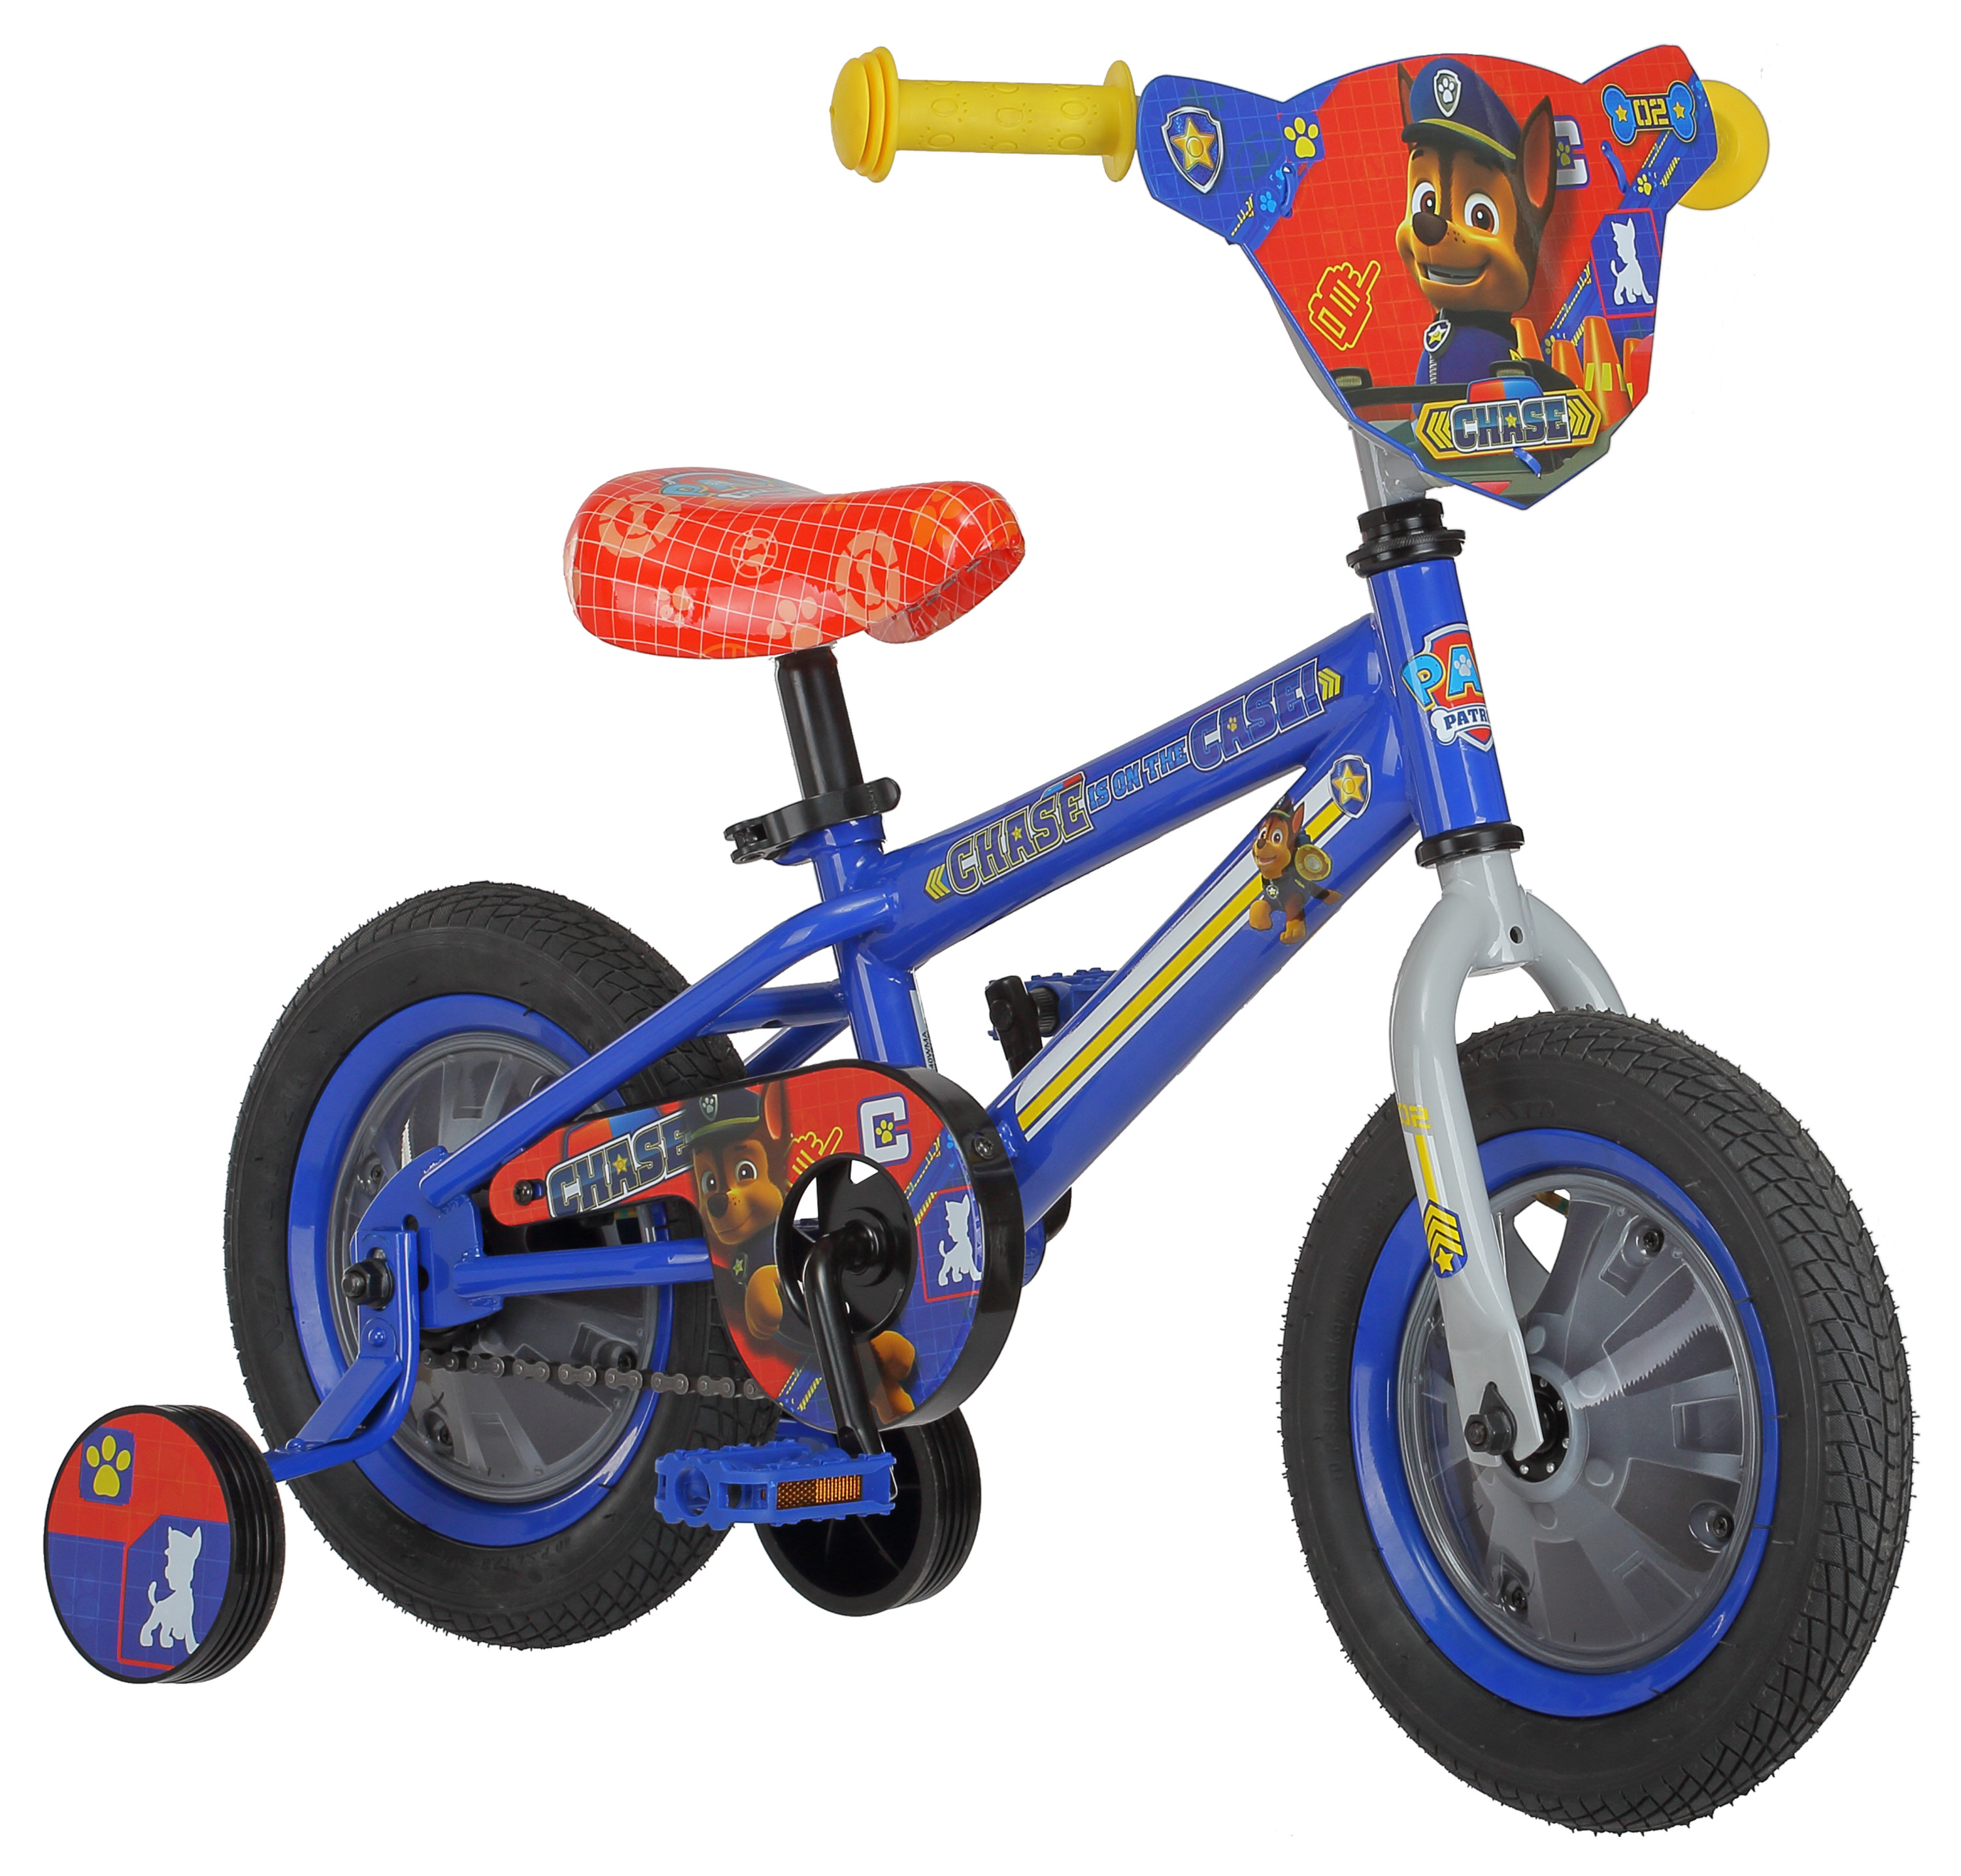 Nickelodeon's PAW Patrol: Chase Sidewalk Bike, 12-inch wheels, ages 2 - 4, blue - image 1 of 8